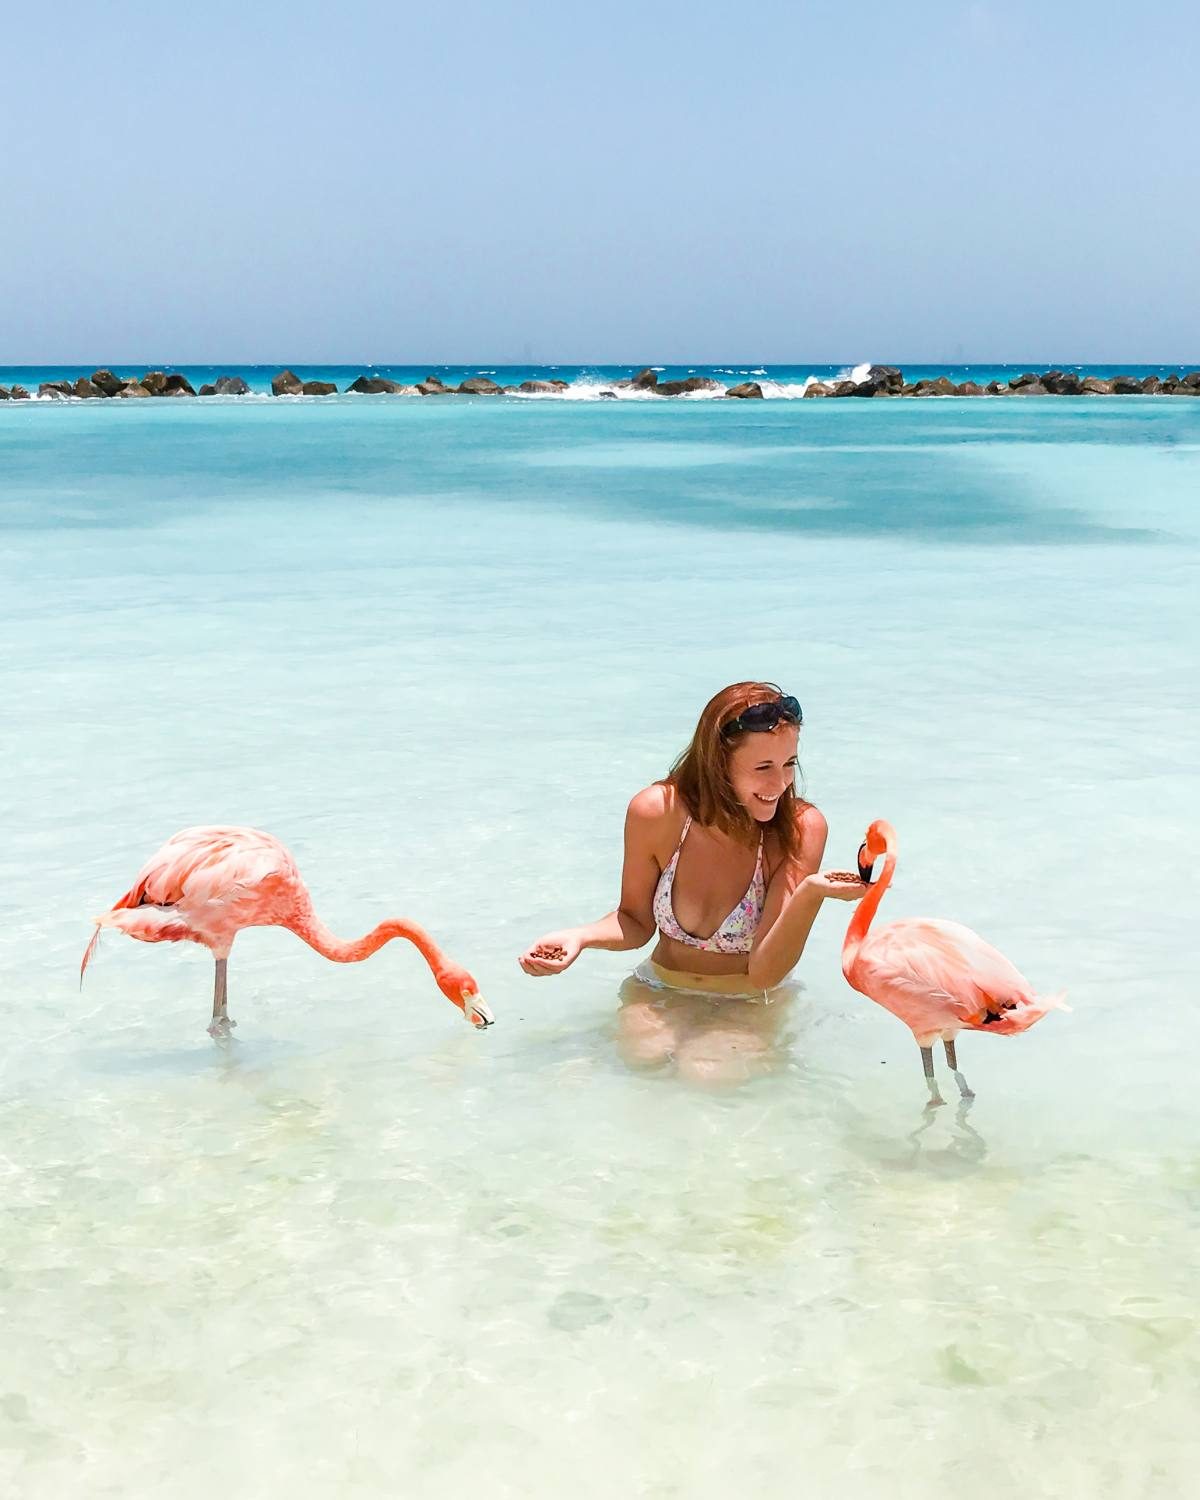 Flamingo Beach Aruba